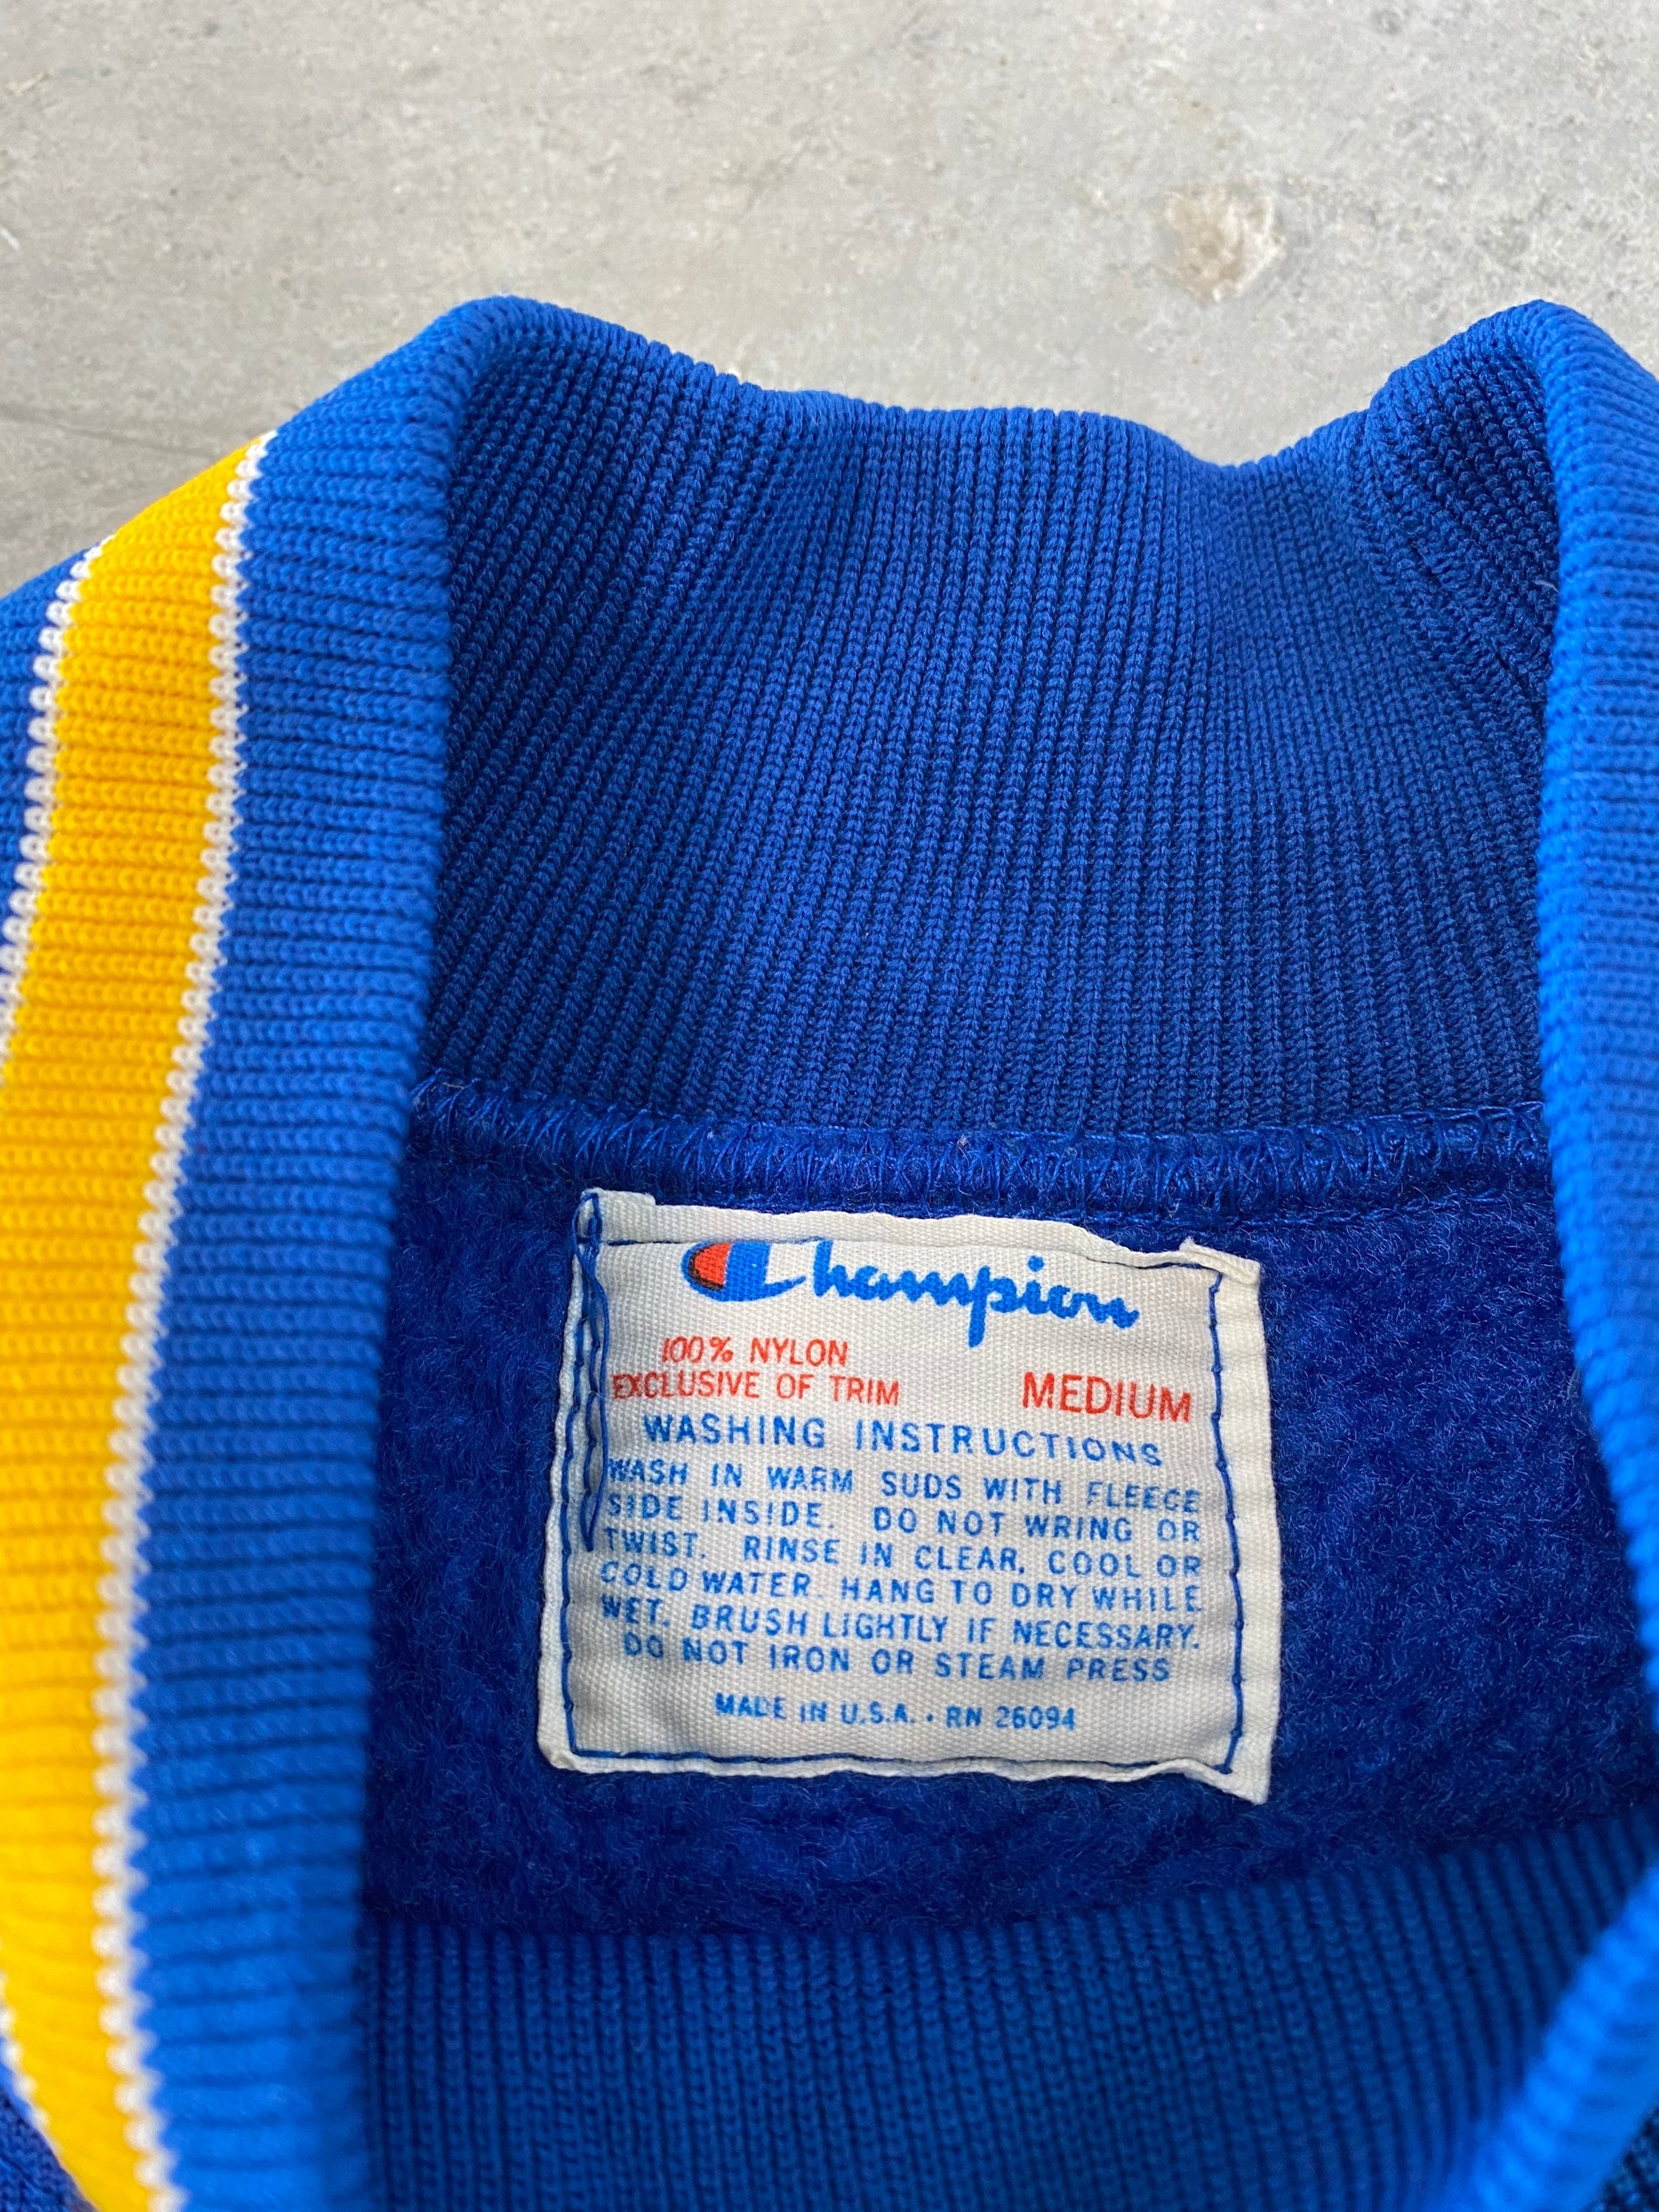 Vintage 80s Champion Notre Dame Sweatshirt Size Medium